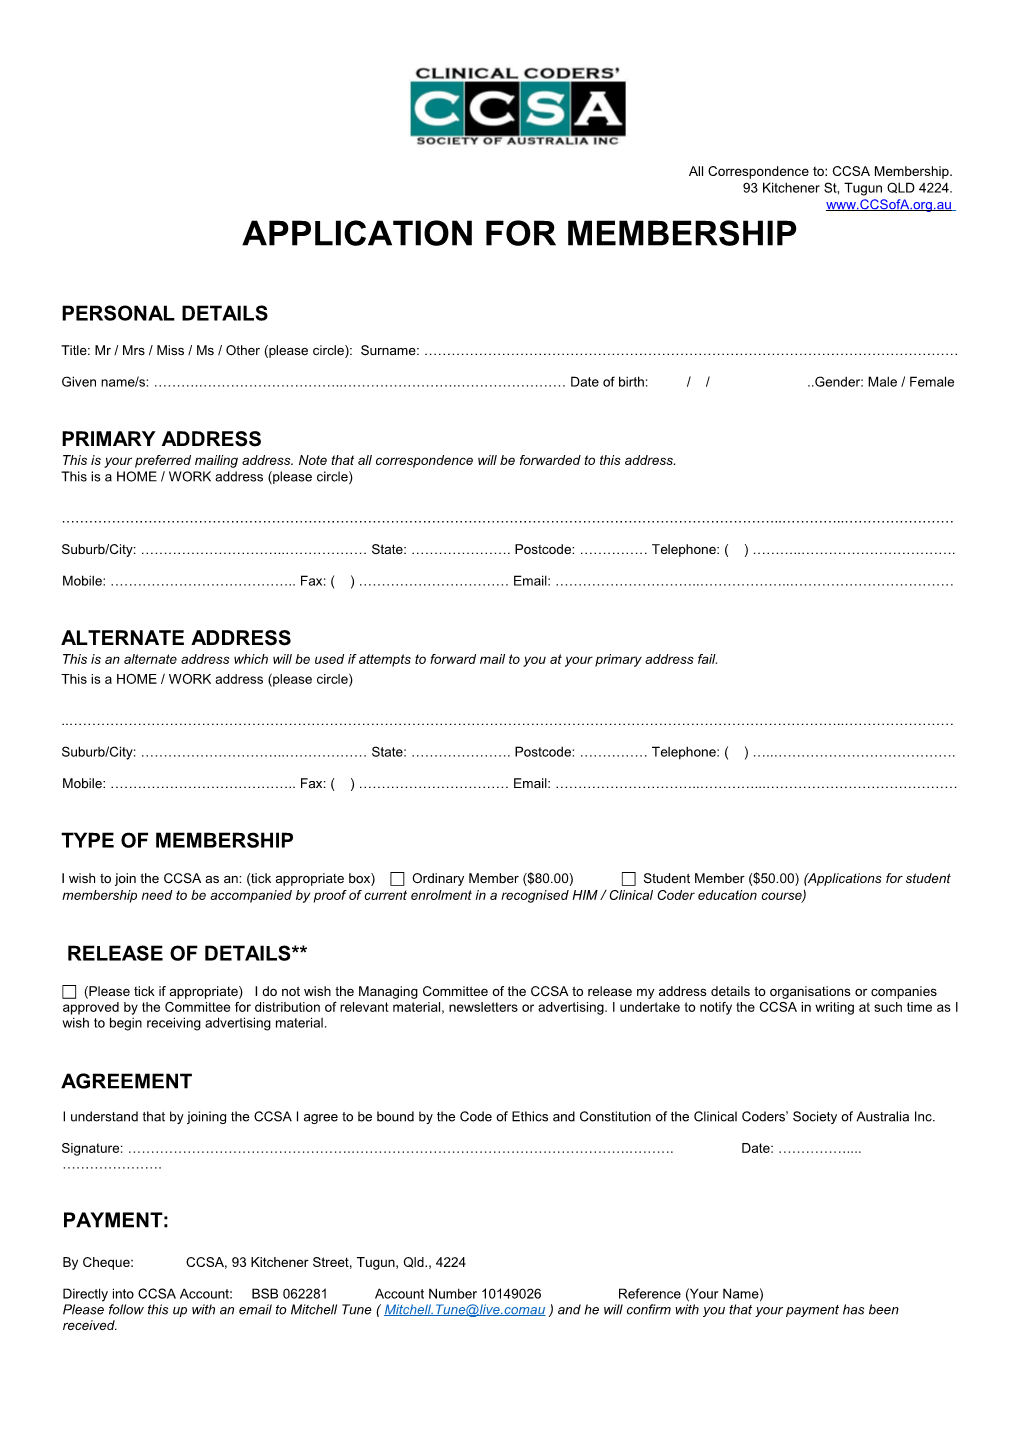 All Correspondence To: CCSA Membership